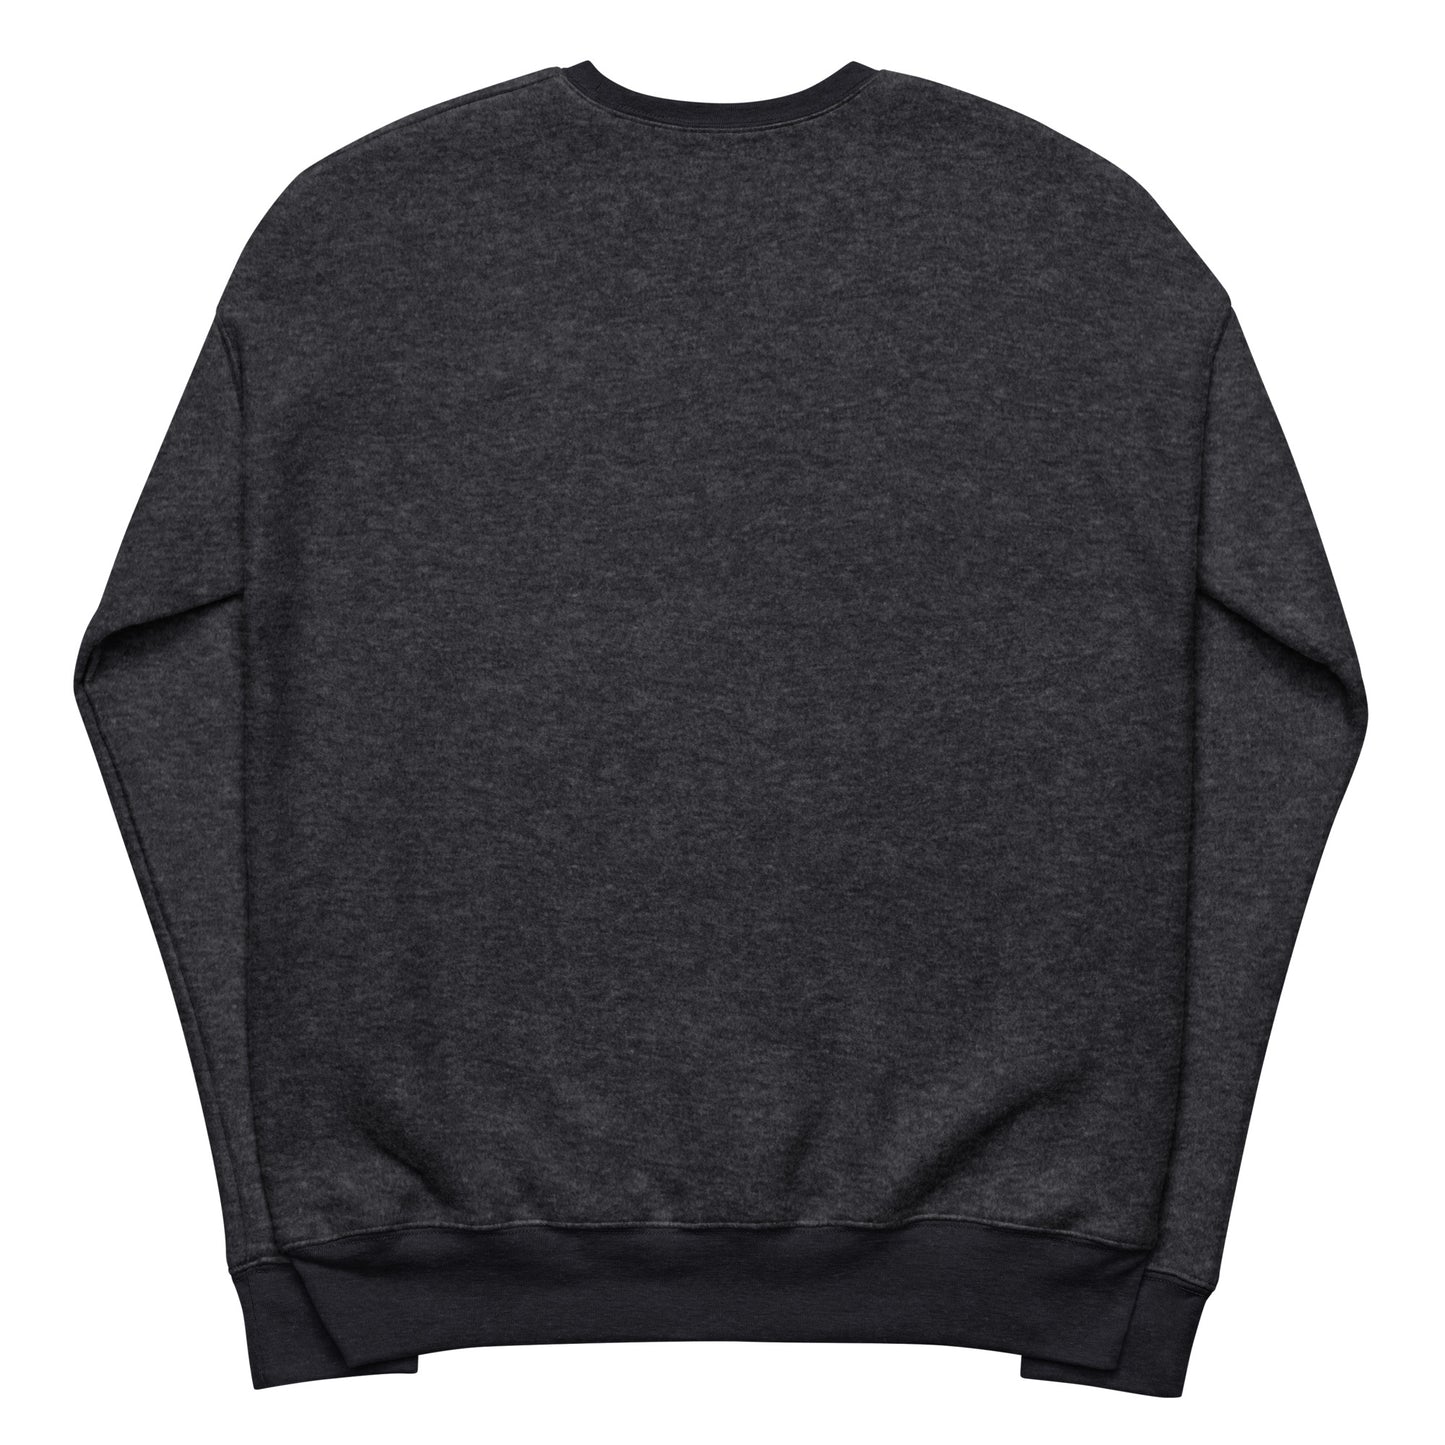 The Sideline Project Unisex Sueded Fleece Sweatshirt